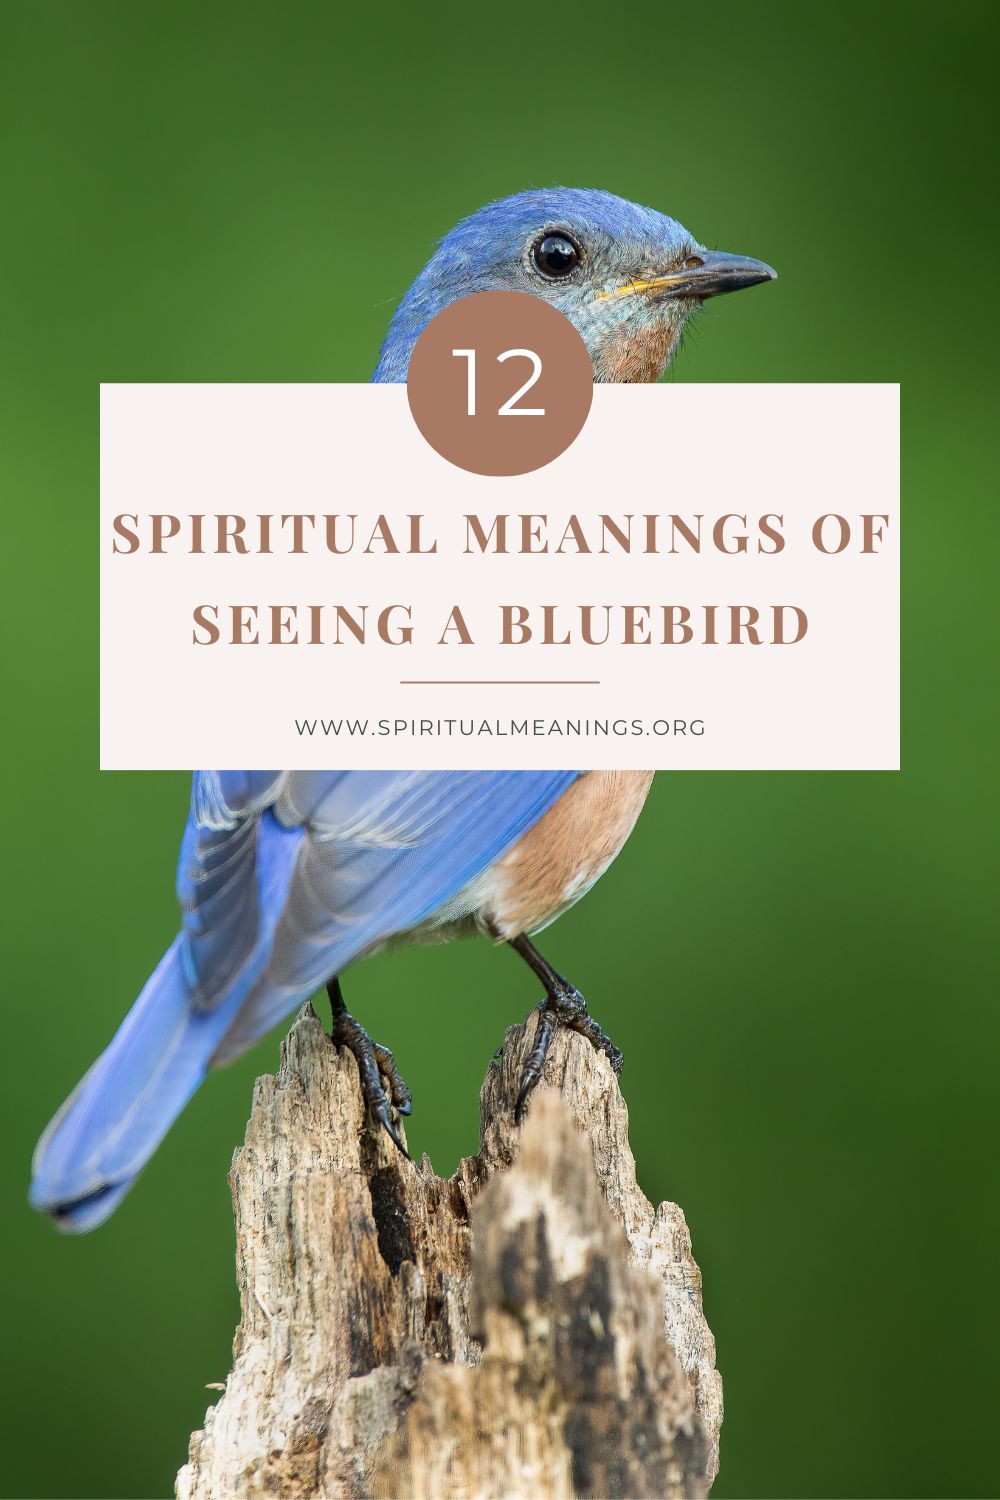 Bluebird Facts (Spiritual Meanings)